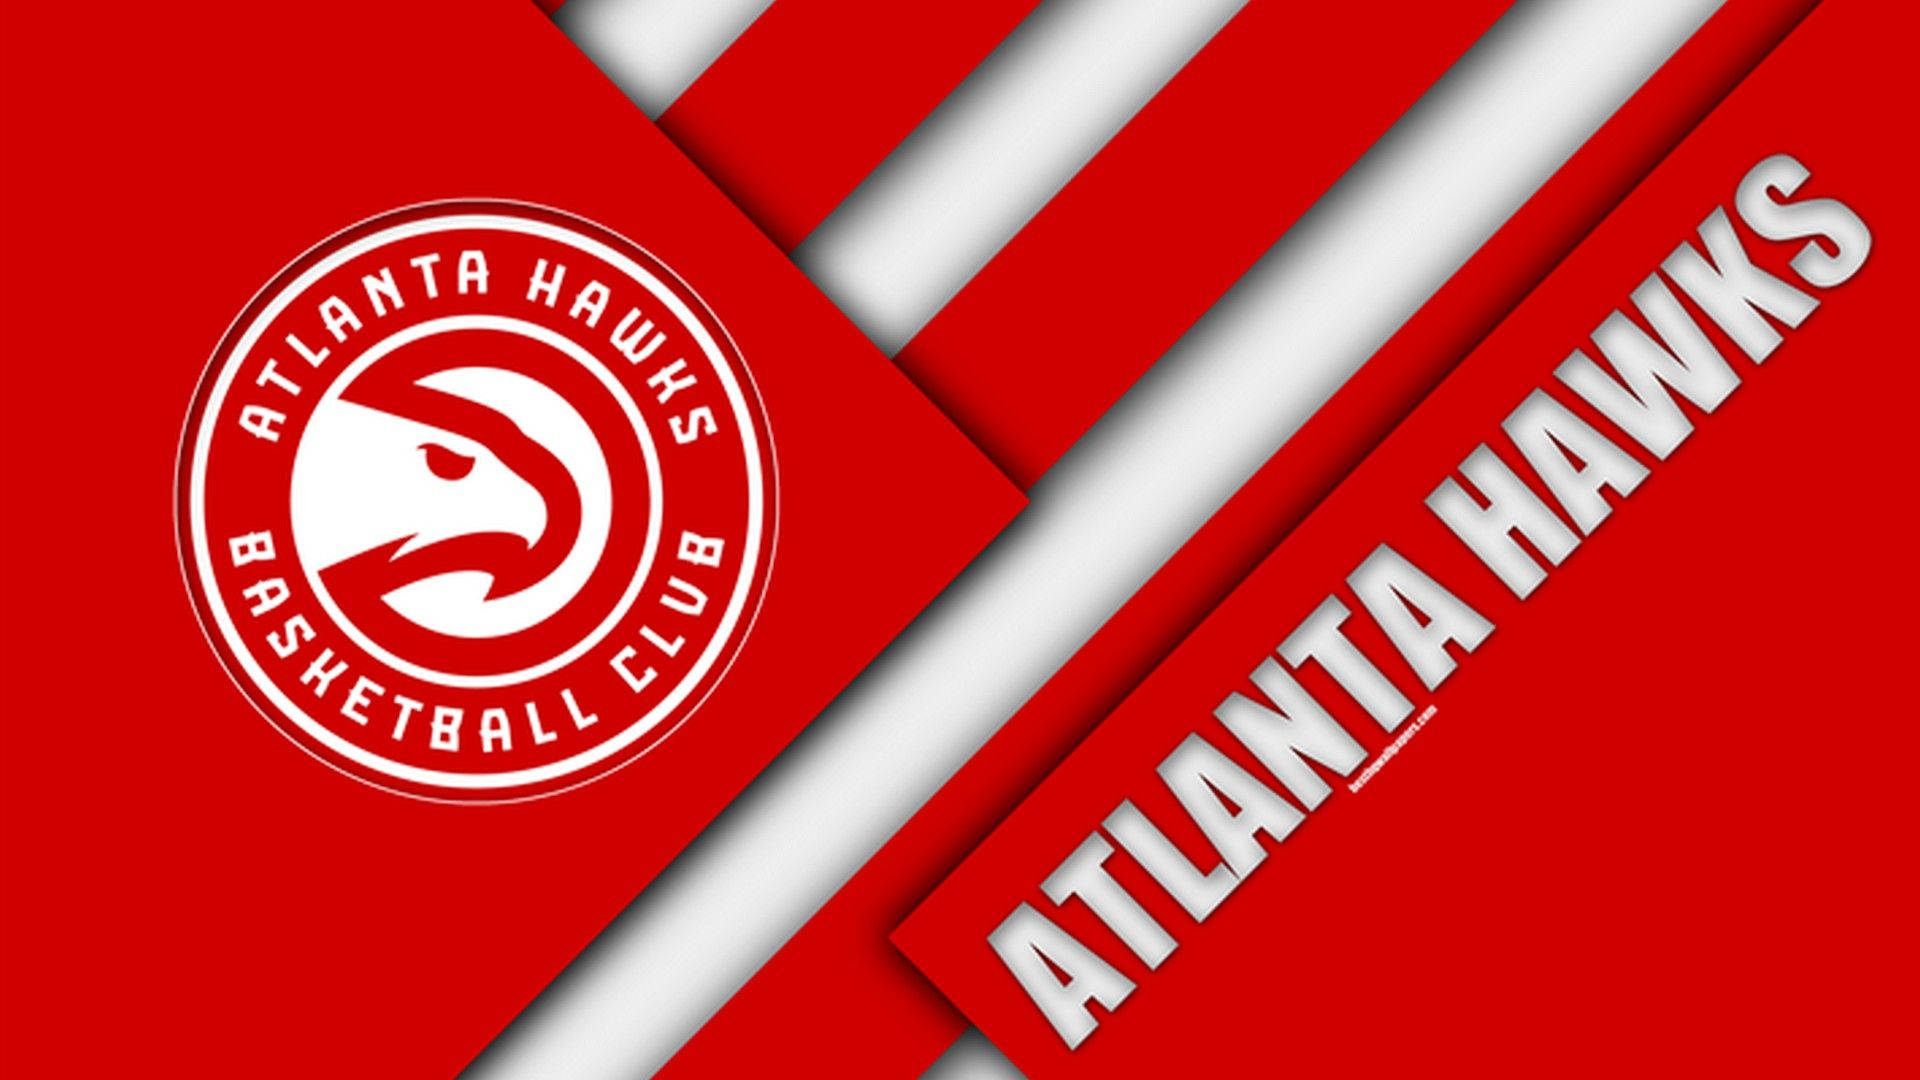 Atlanta Hawks Basketball Club Poster Background